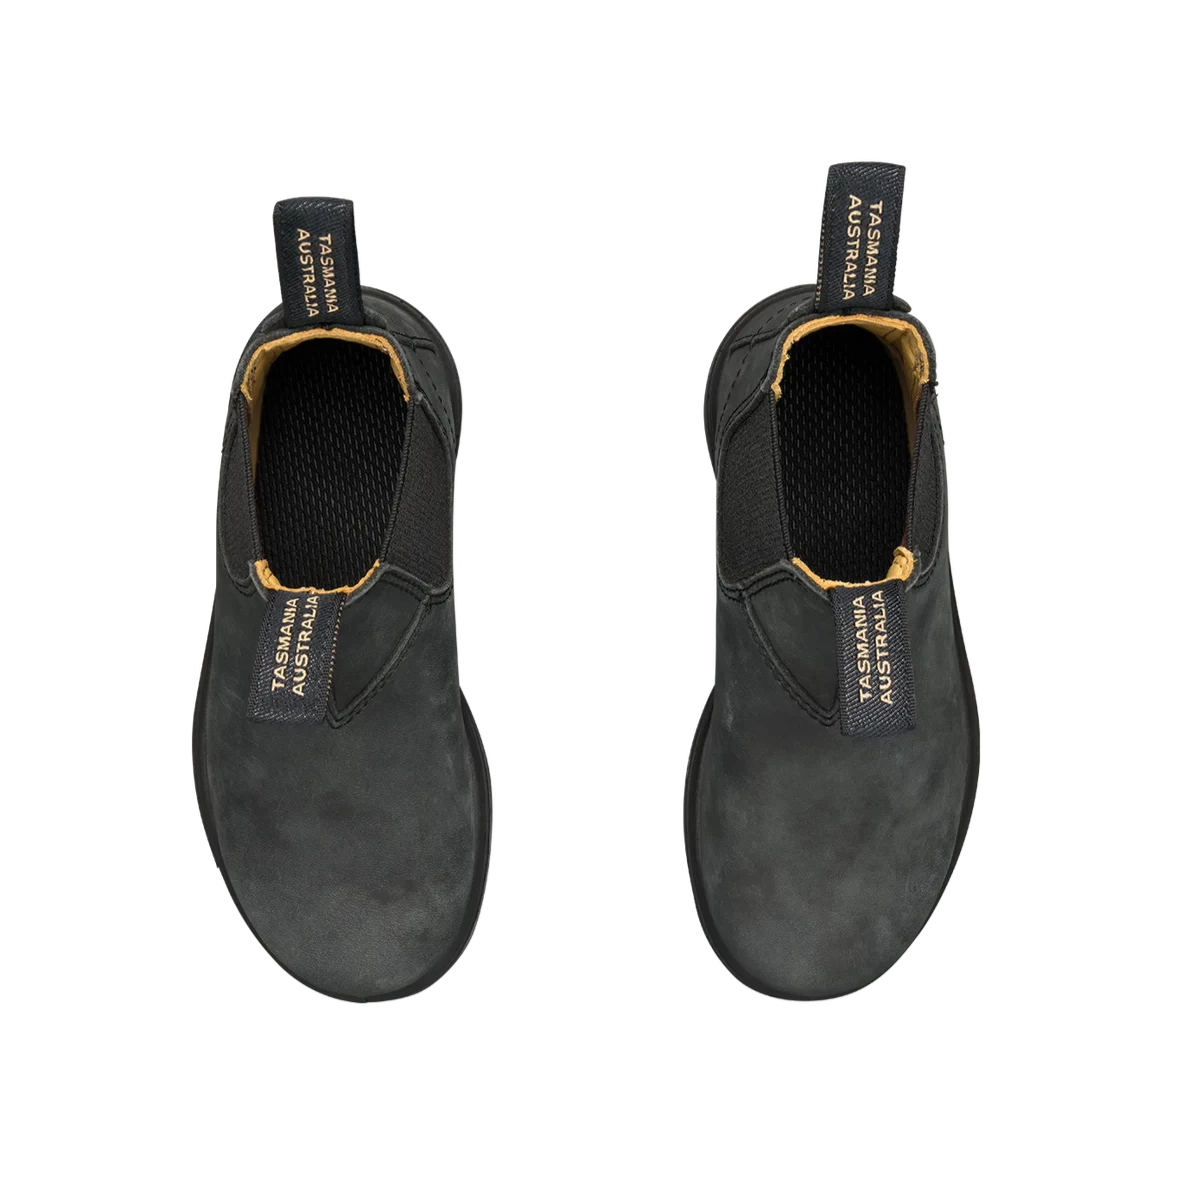 Blundstone #1325 - Blunnies Children's Boot (Rustic Black)